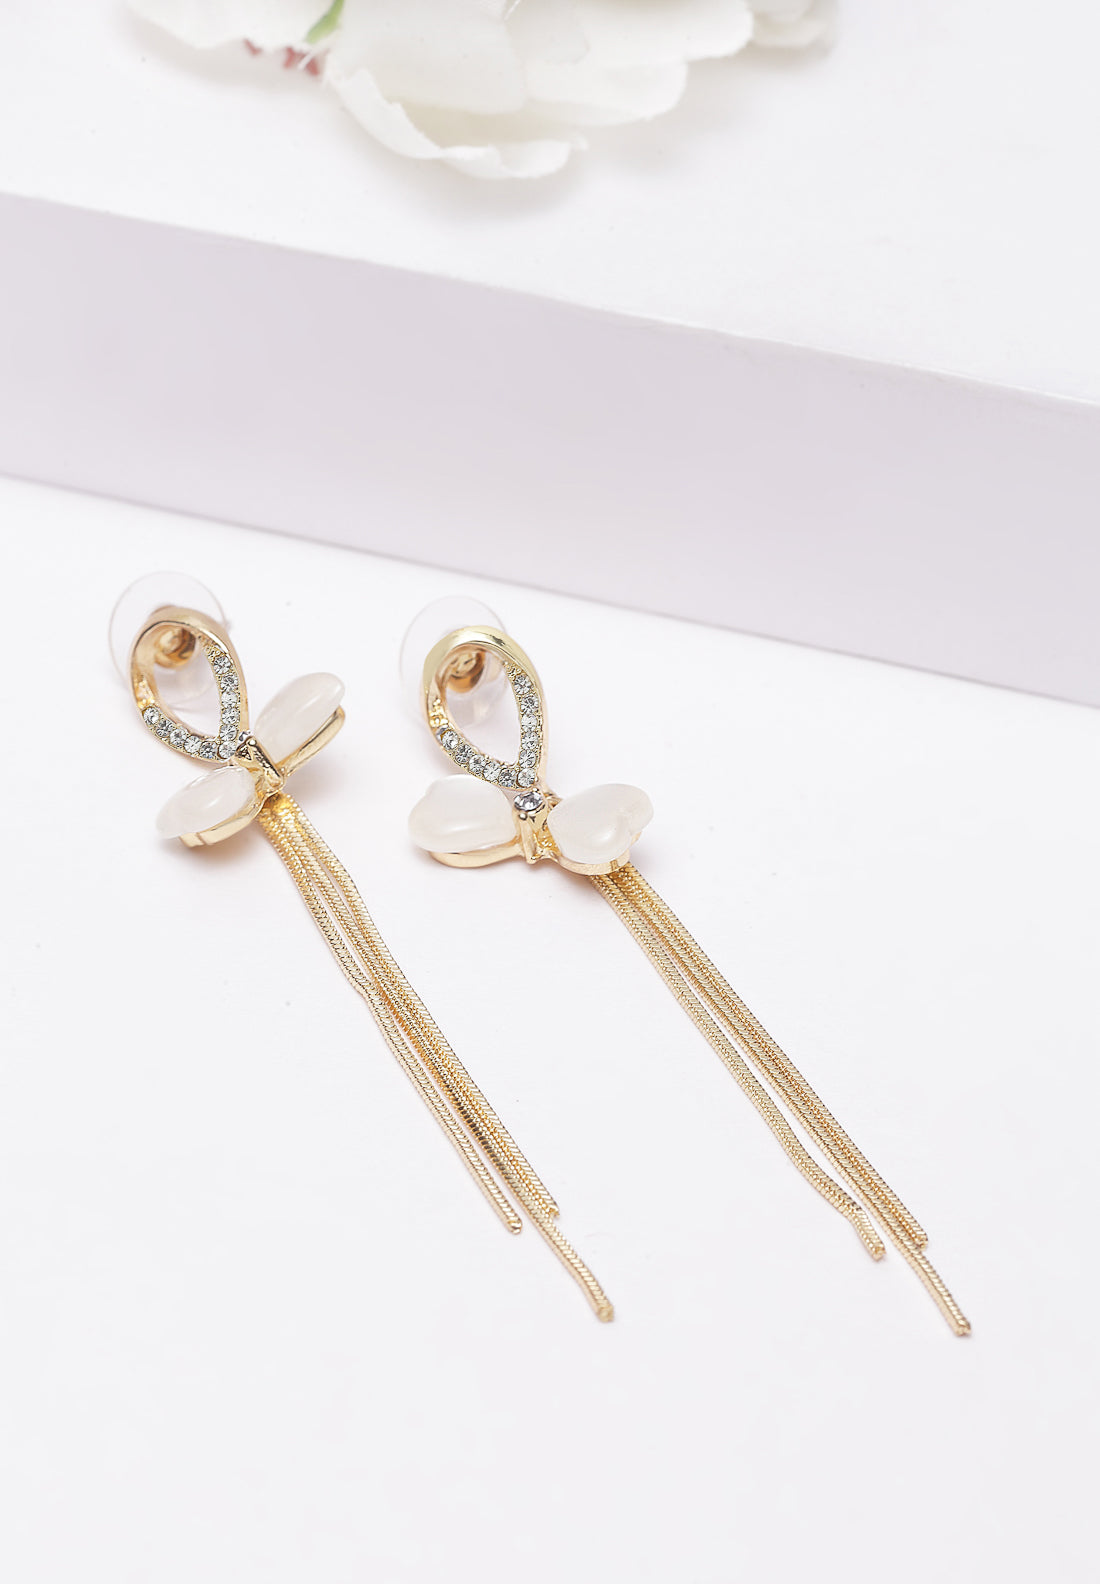 Avant-Garde Paris Gold Bow Crystal Hanging Earrings